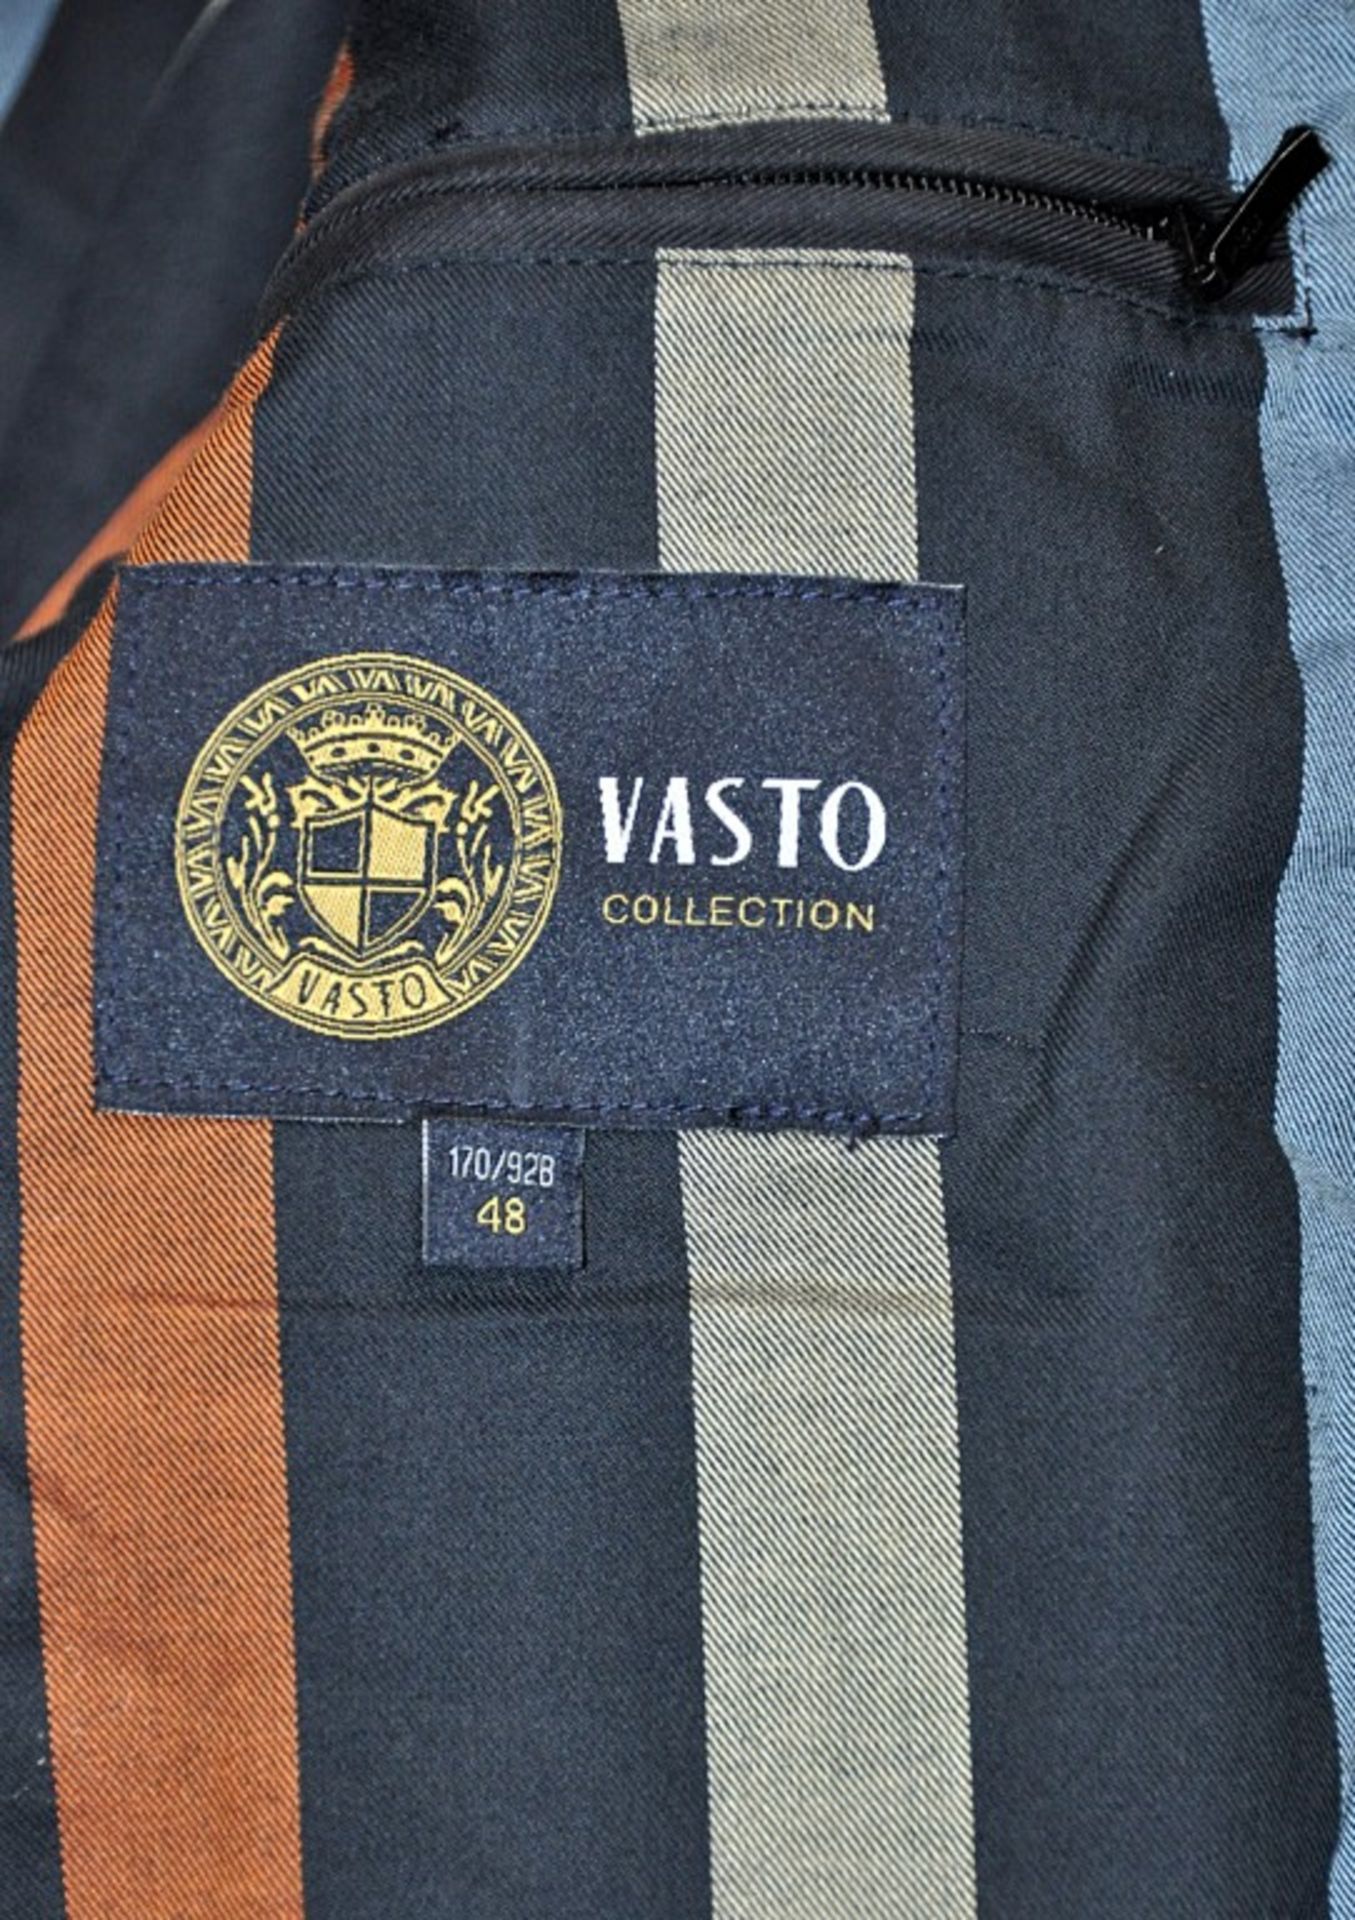 1 x Men's Long Sleeve Casual Jacket By International Luxury Brand "Vasto" (BAJ72241) – Size: Small – - Image 4 of 6